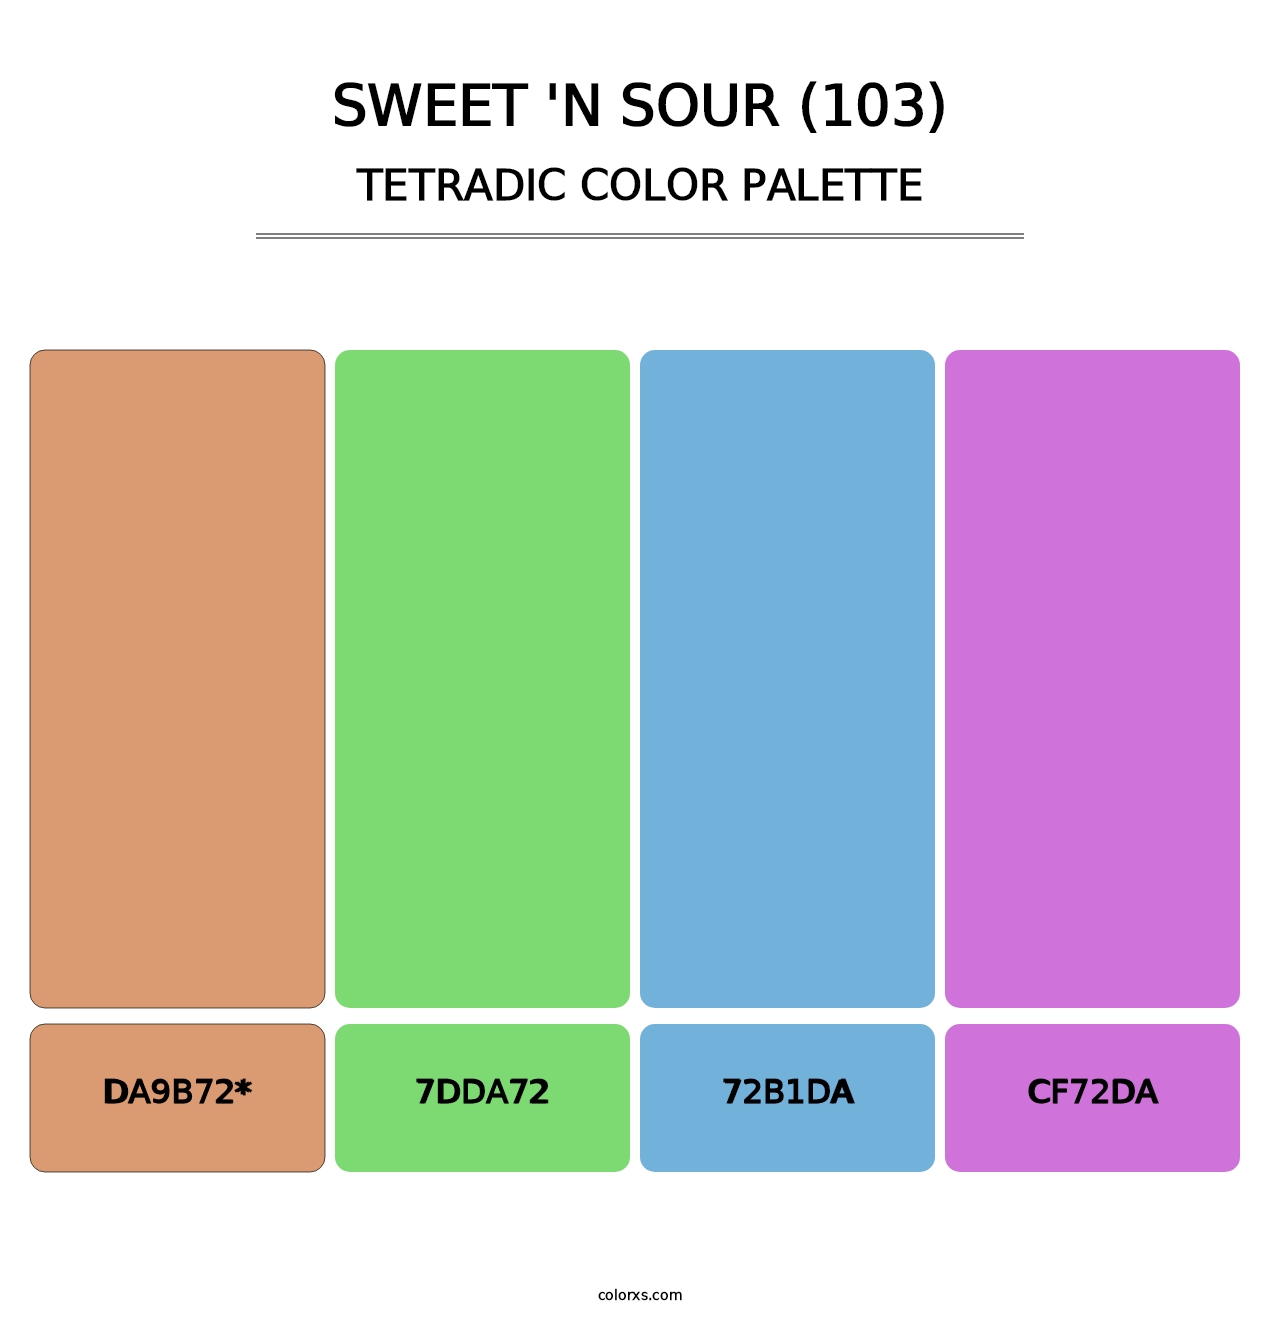 Sweet 'n Sour (103) - Tetradic Color Palette